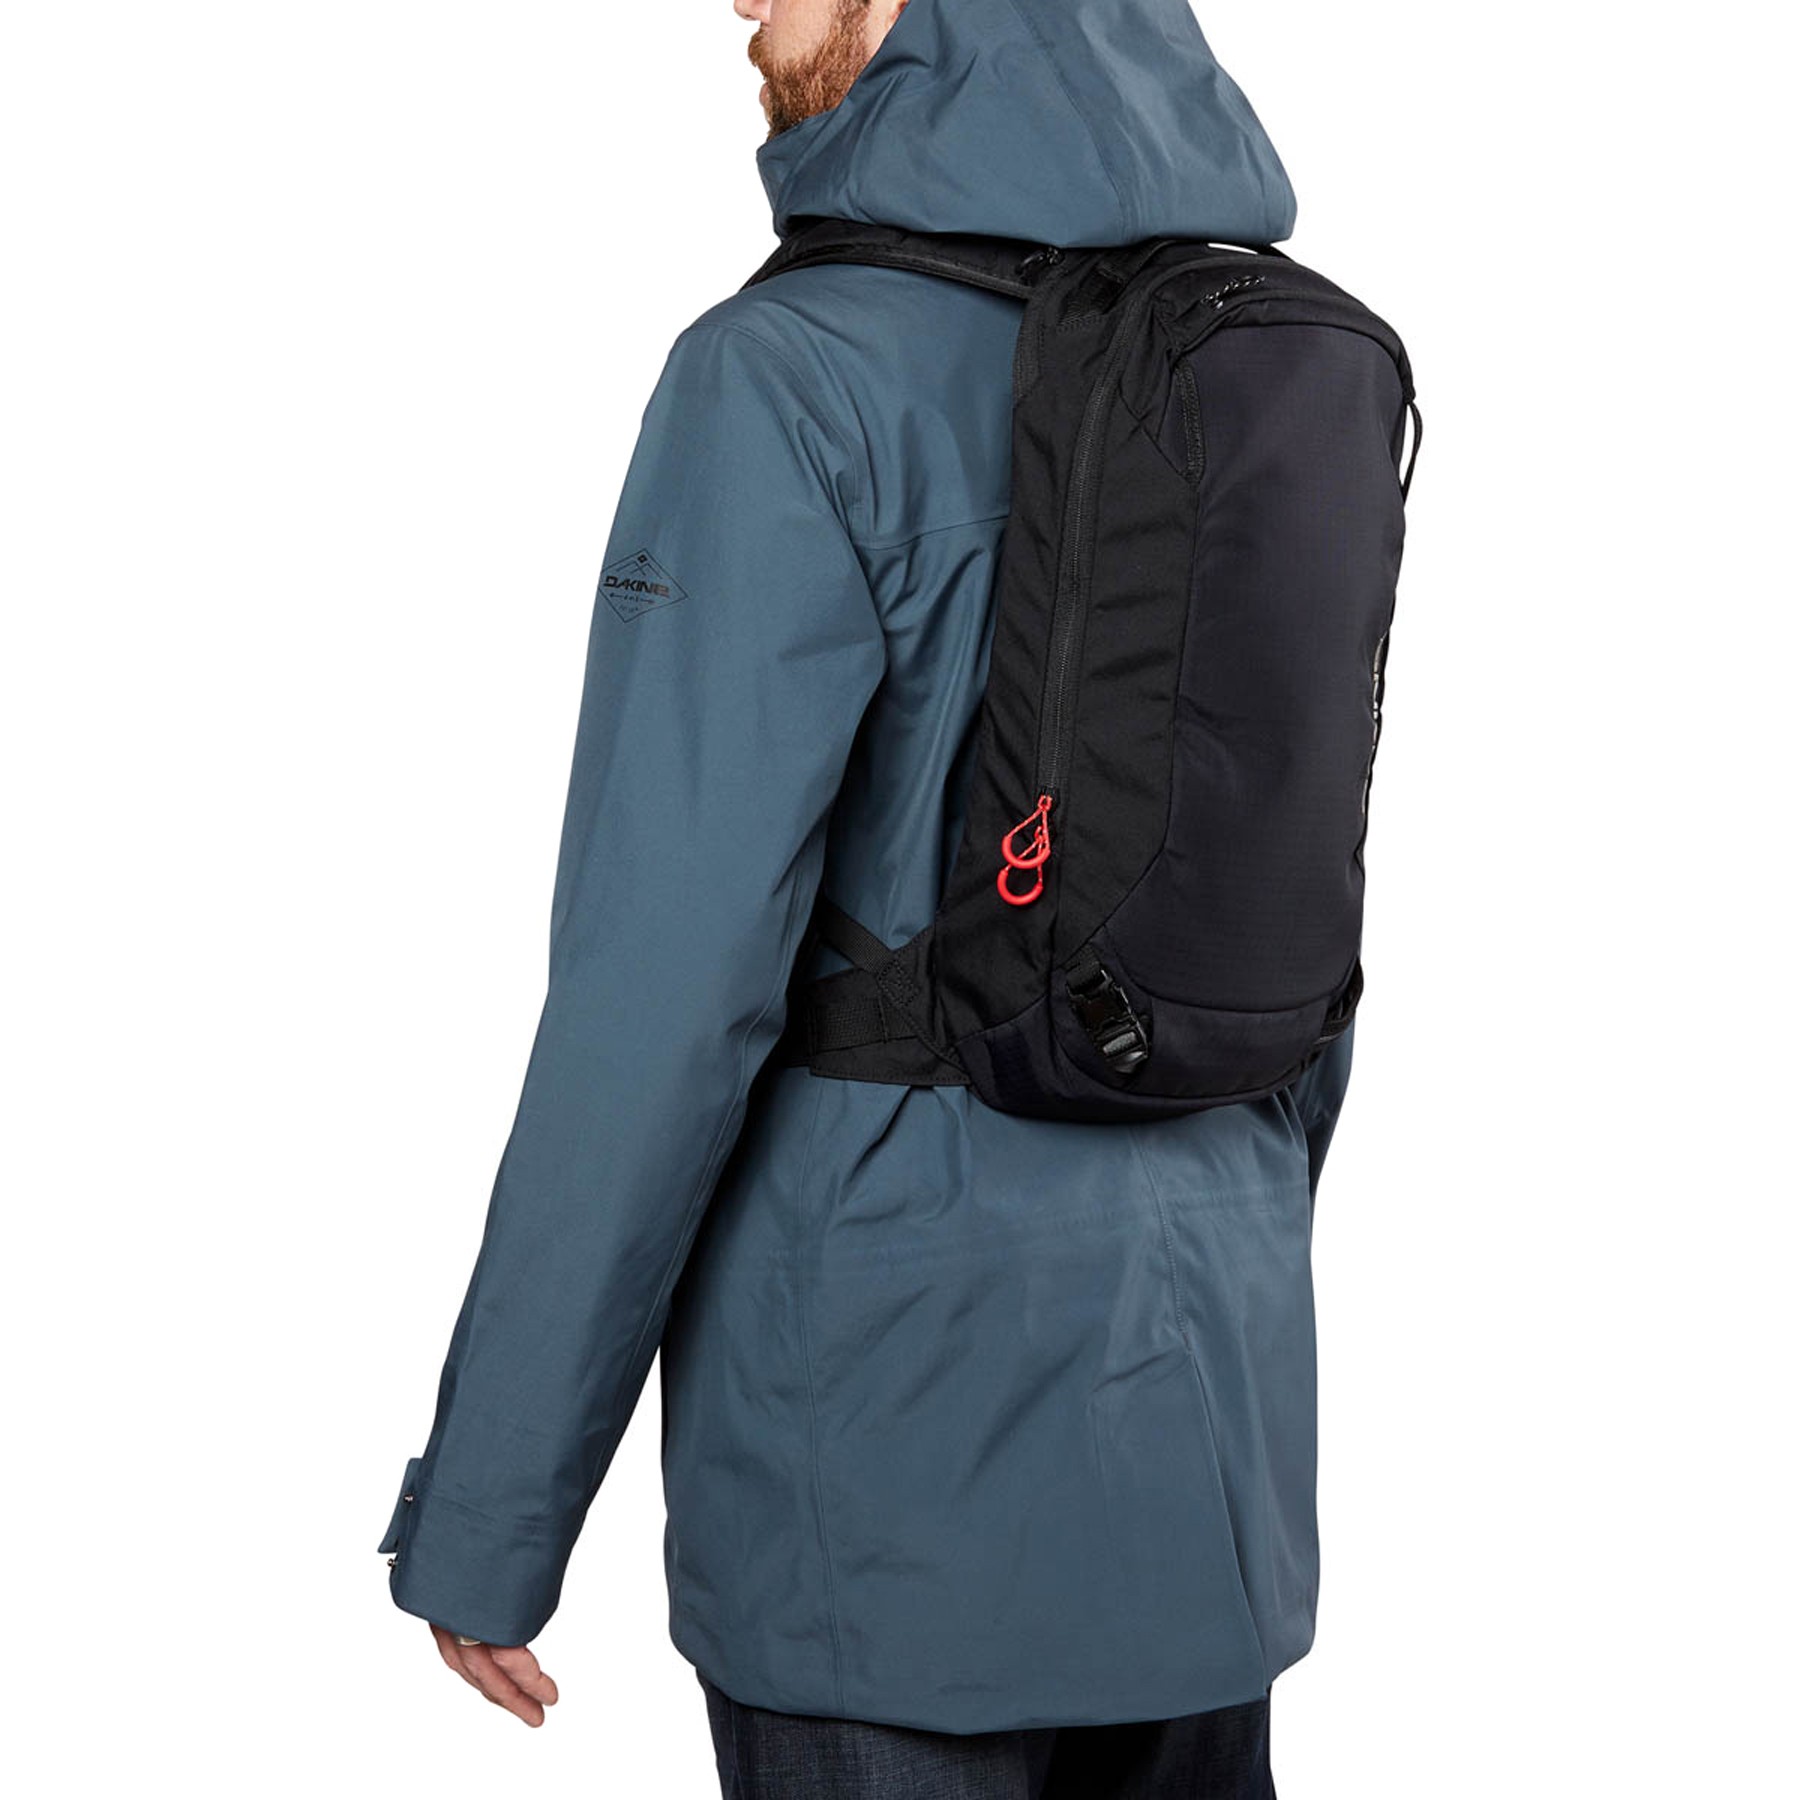 Dakine Poacher 14 Snowboard/Ski Backpack